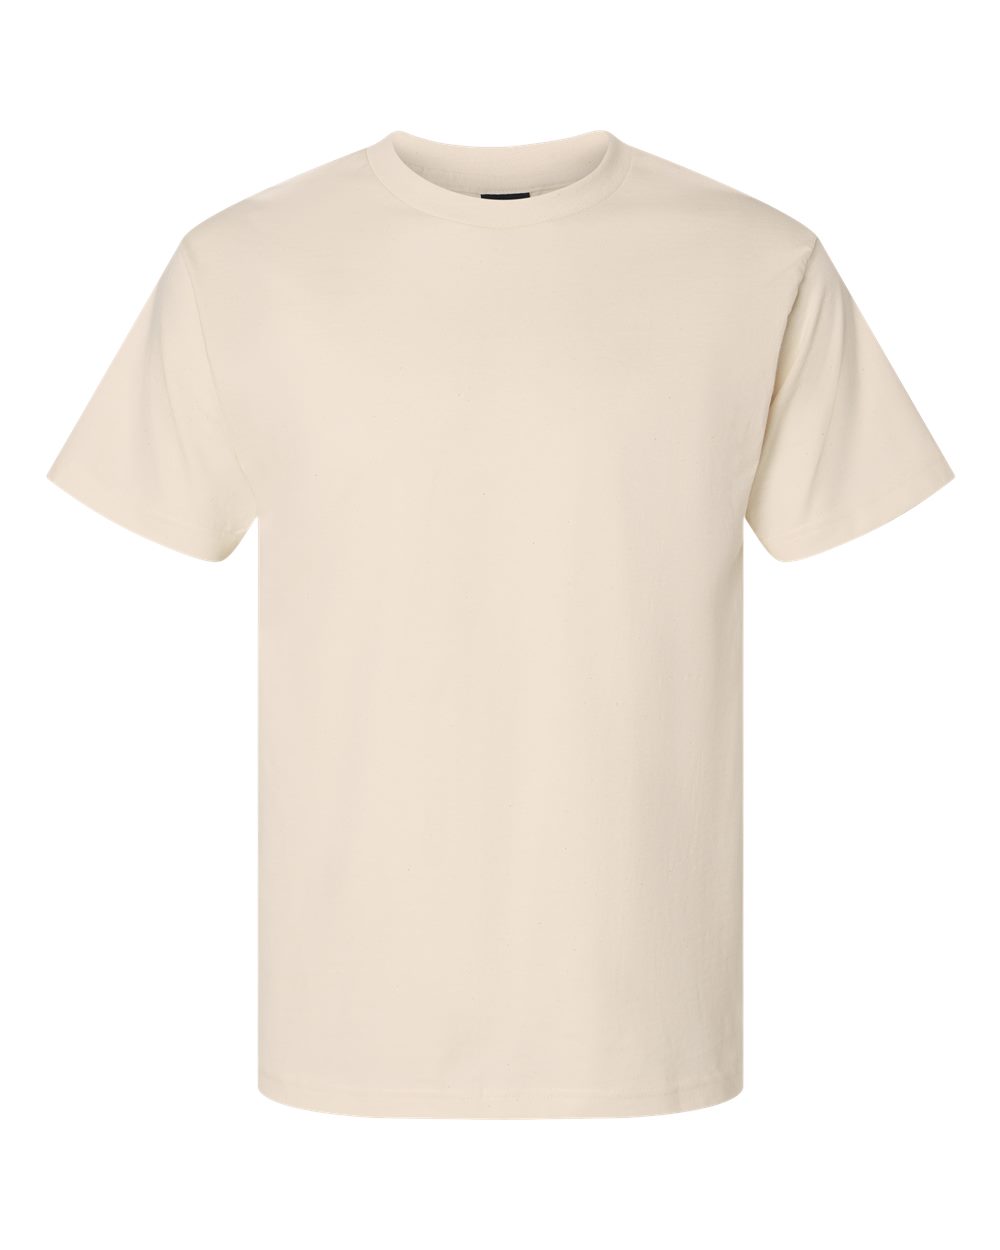 HEAVYWEIGHT - Hanes - Beefy-T® T-Shirt - 5180